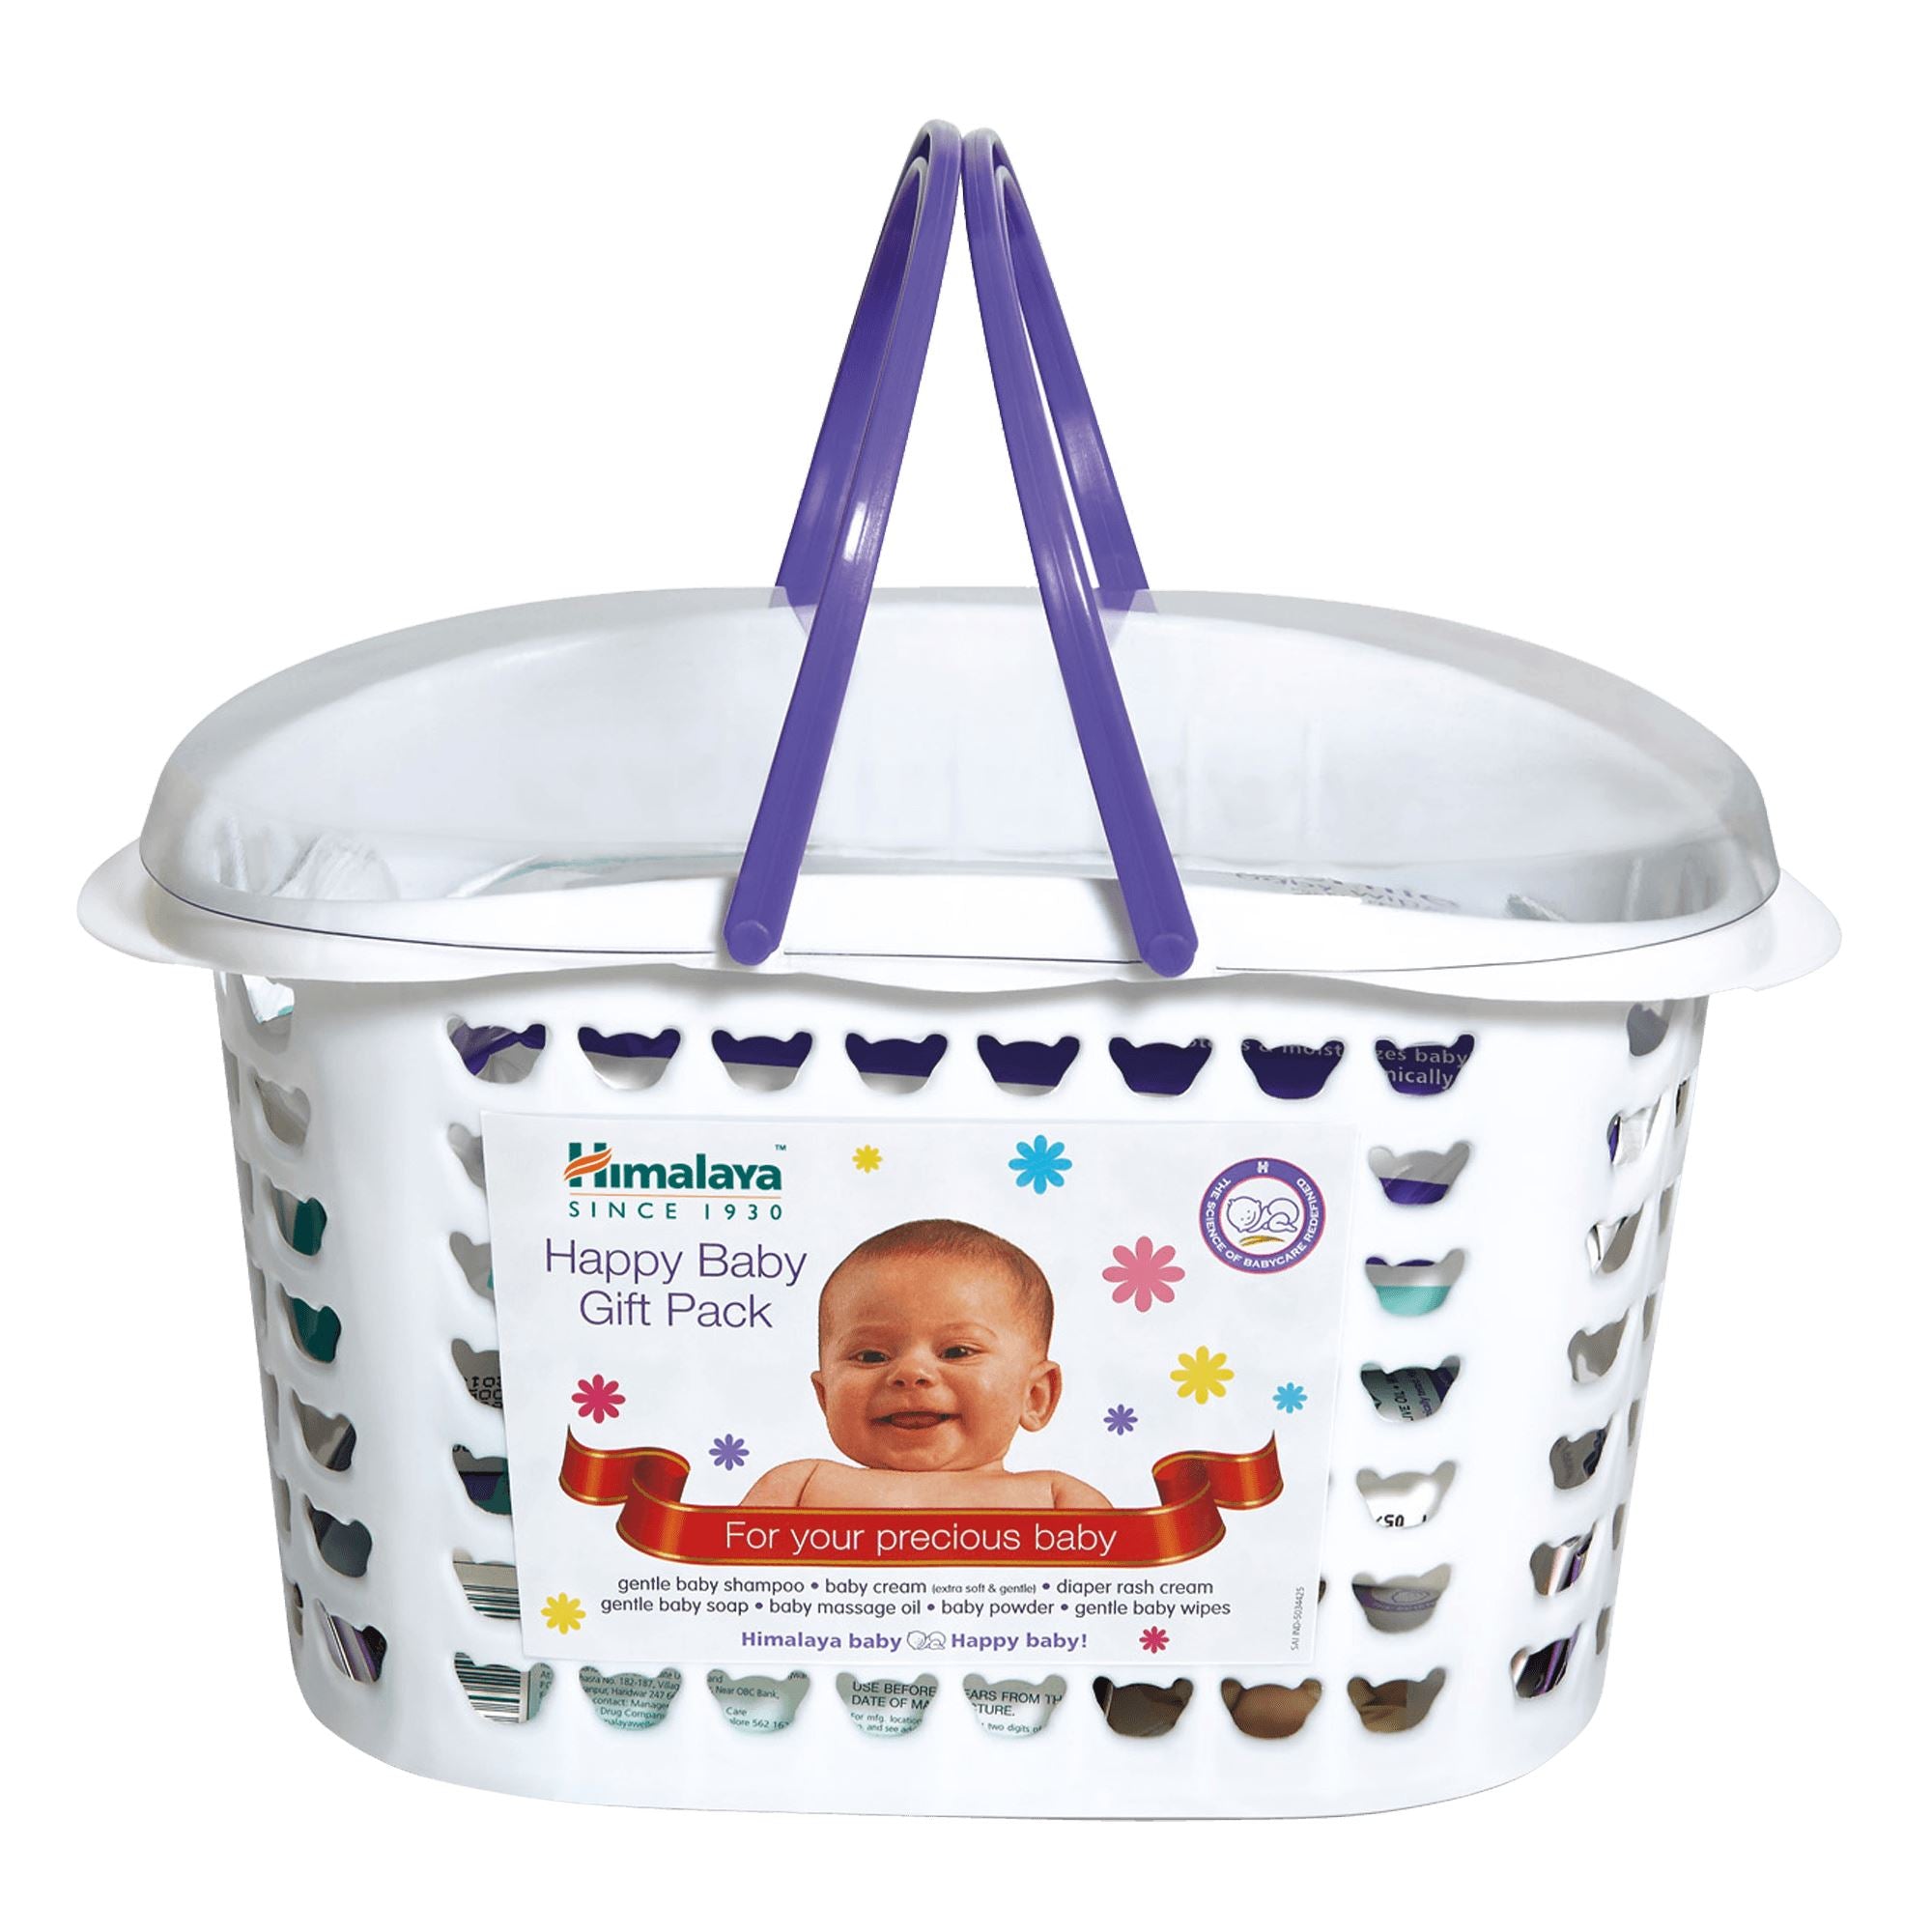 Himalaya Happy Baby Gift Pack 9 in 1 - Walmart.com